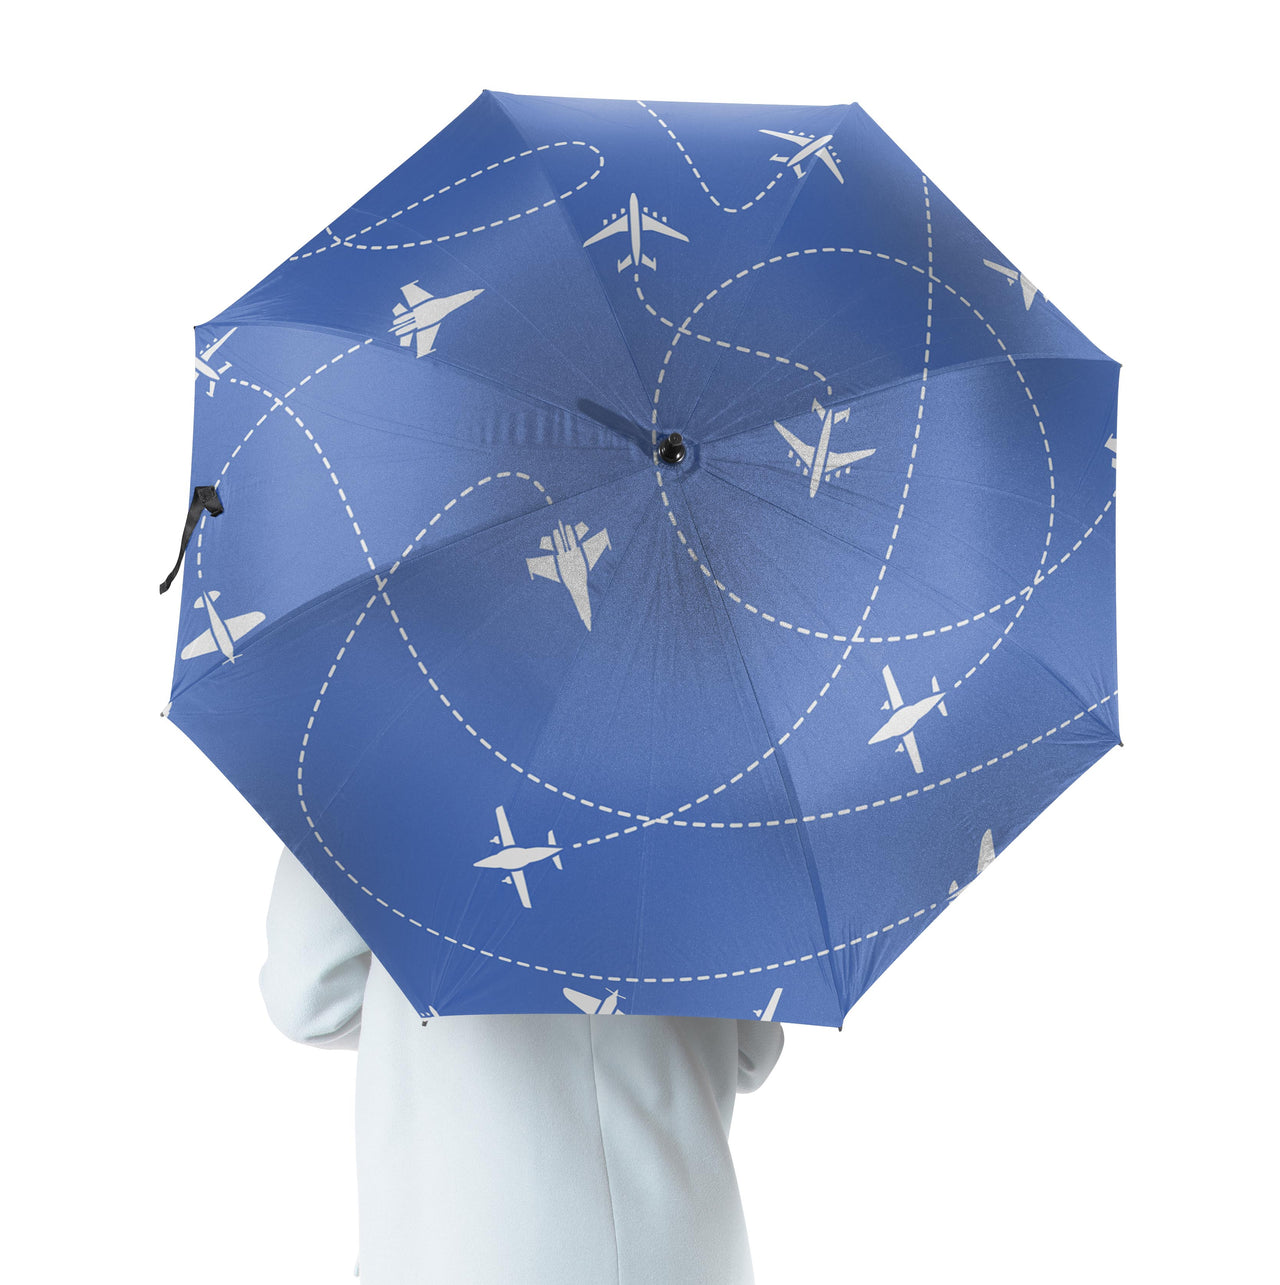 Travel The World By Plane (Blue) Designed Umbrella